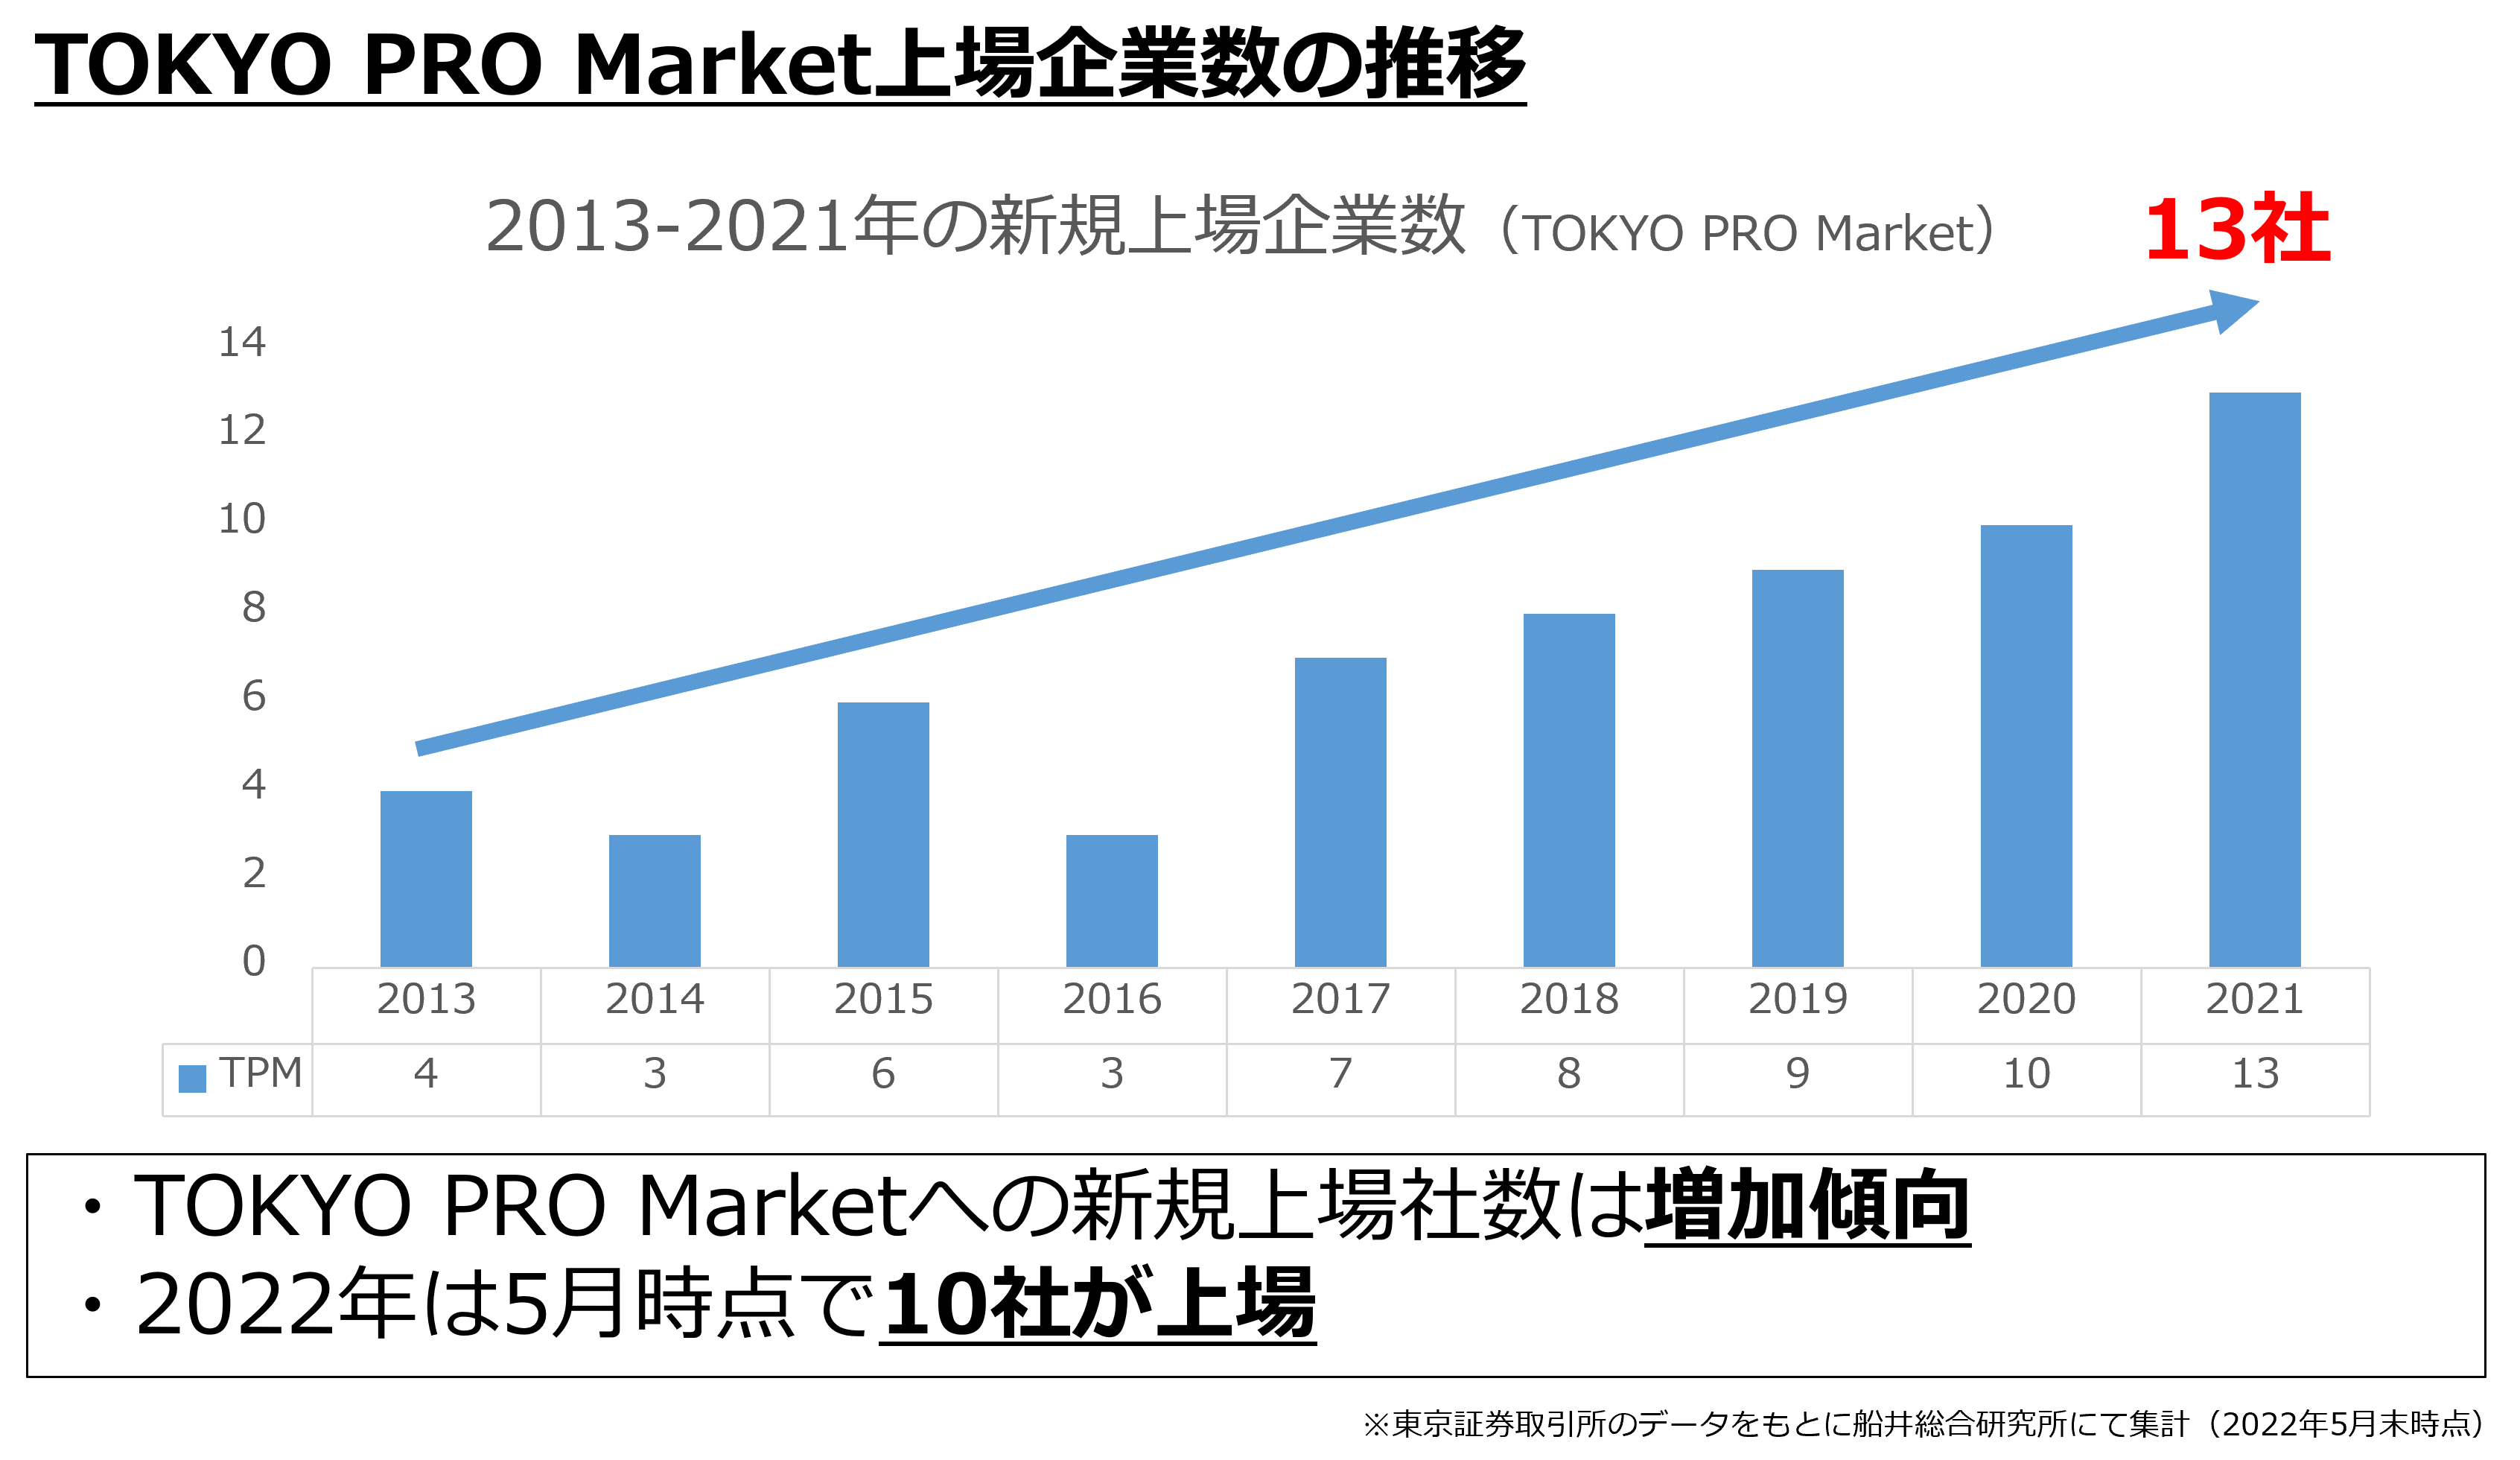 TOKYO PRO Market（東京プロマーケット）、上場企業数の推移（東京証券取引所のデータを元に船井総研にて集計、2022年5月末時点）